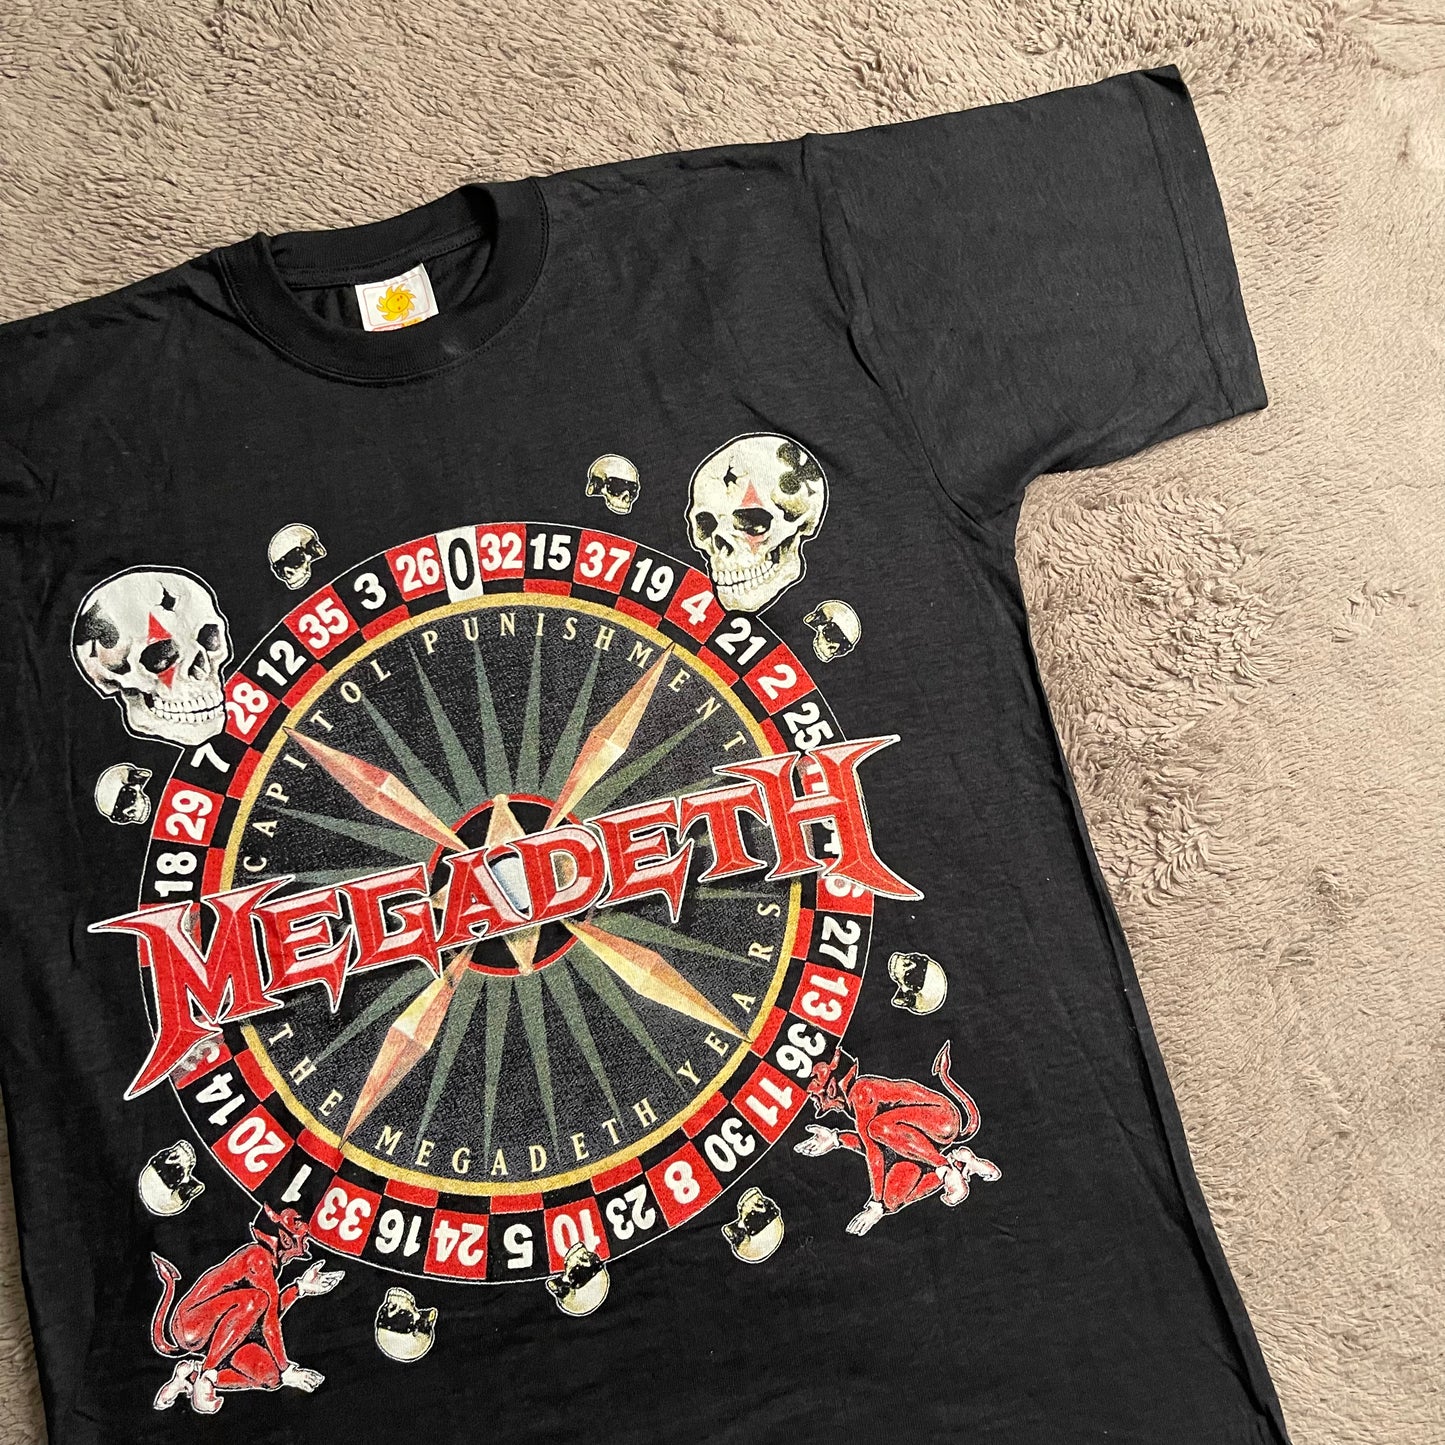 The Megadeth Years Tee (XL)